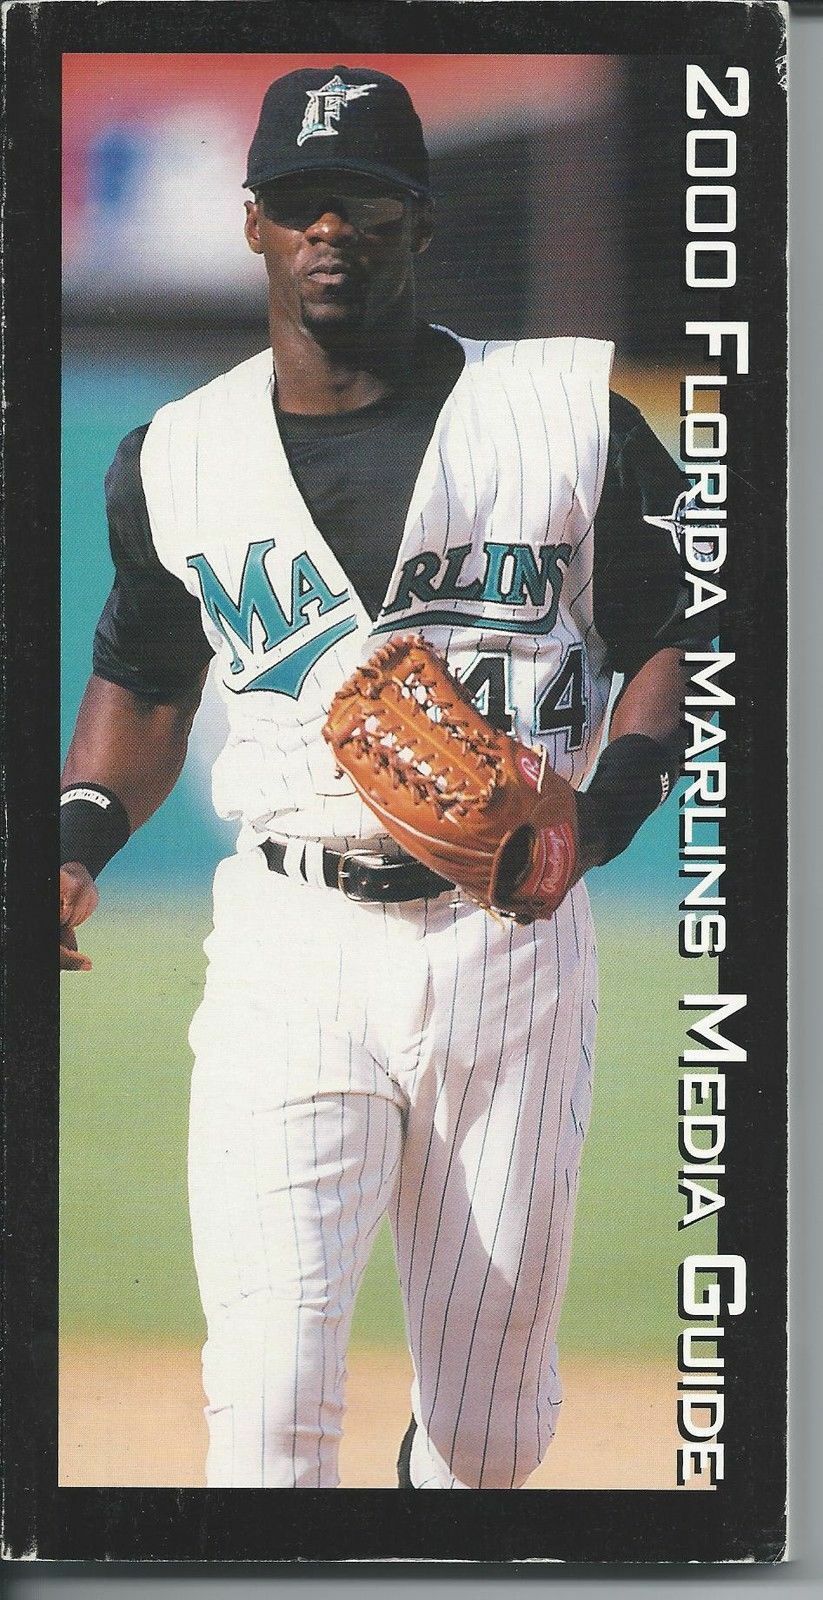 2000 Florida Marlins MLB Media Guide - Preston Wilson cover Image 1